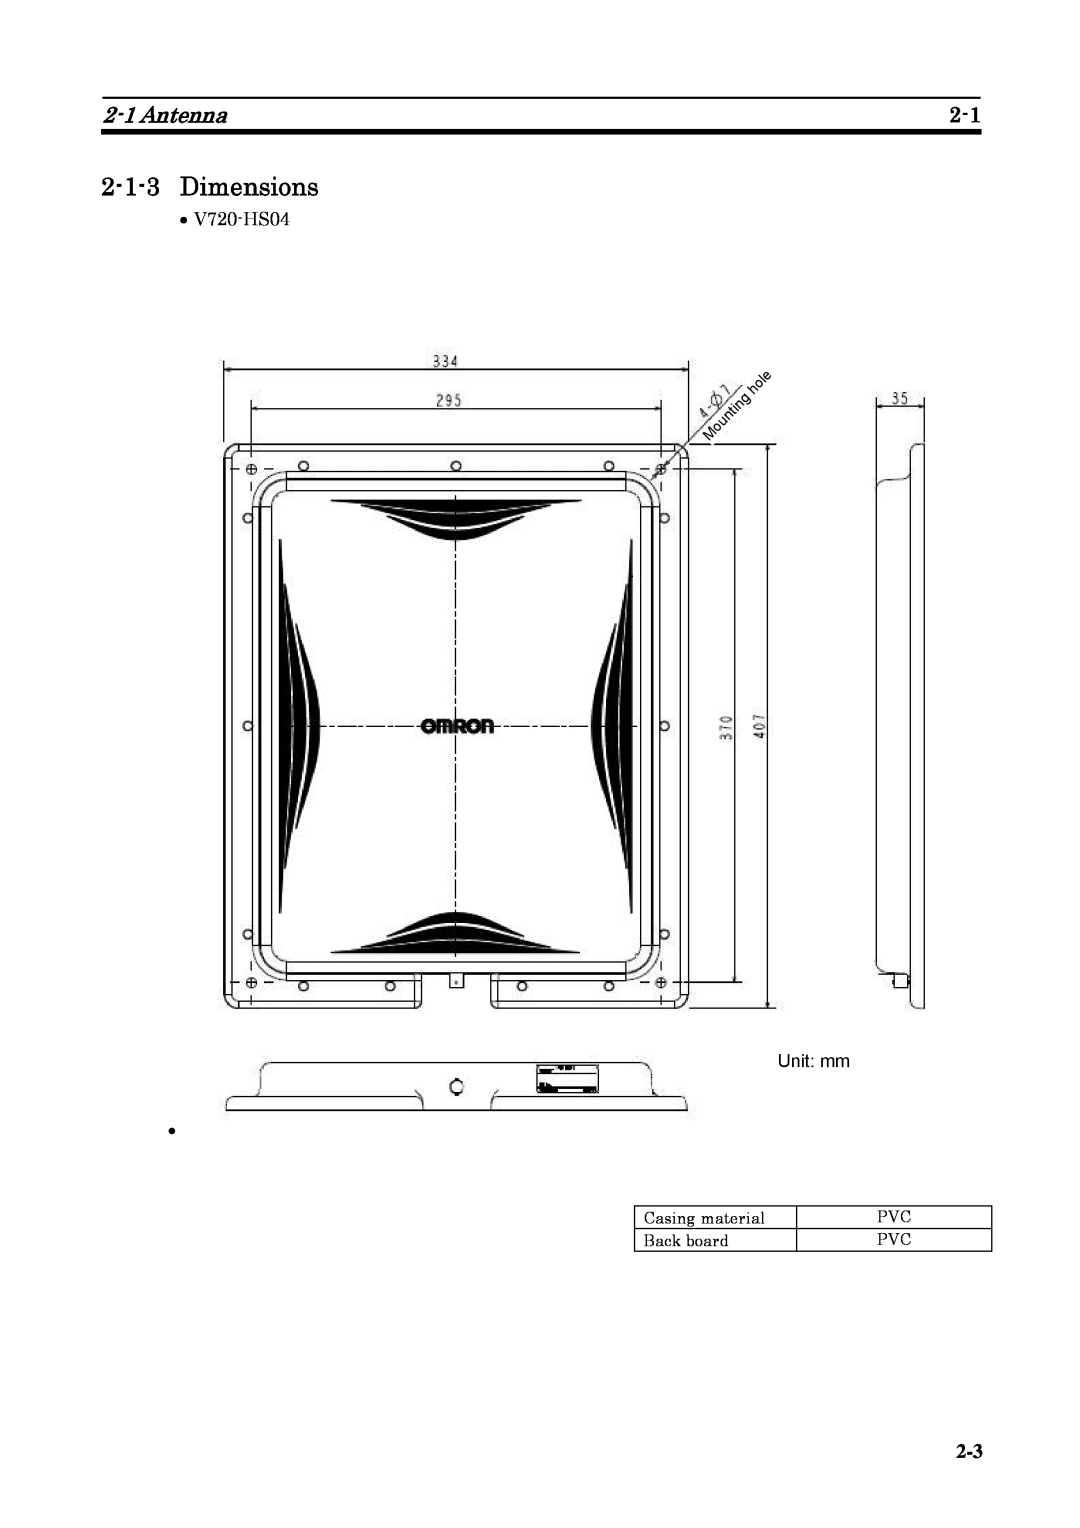 Omron V720-HS04 user manual 2-1-3Dimensions, 2-1Antenna, Unit mm 